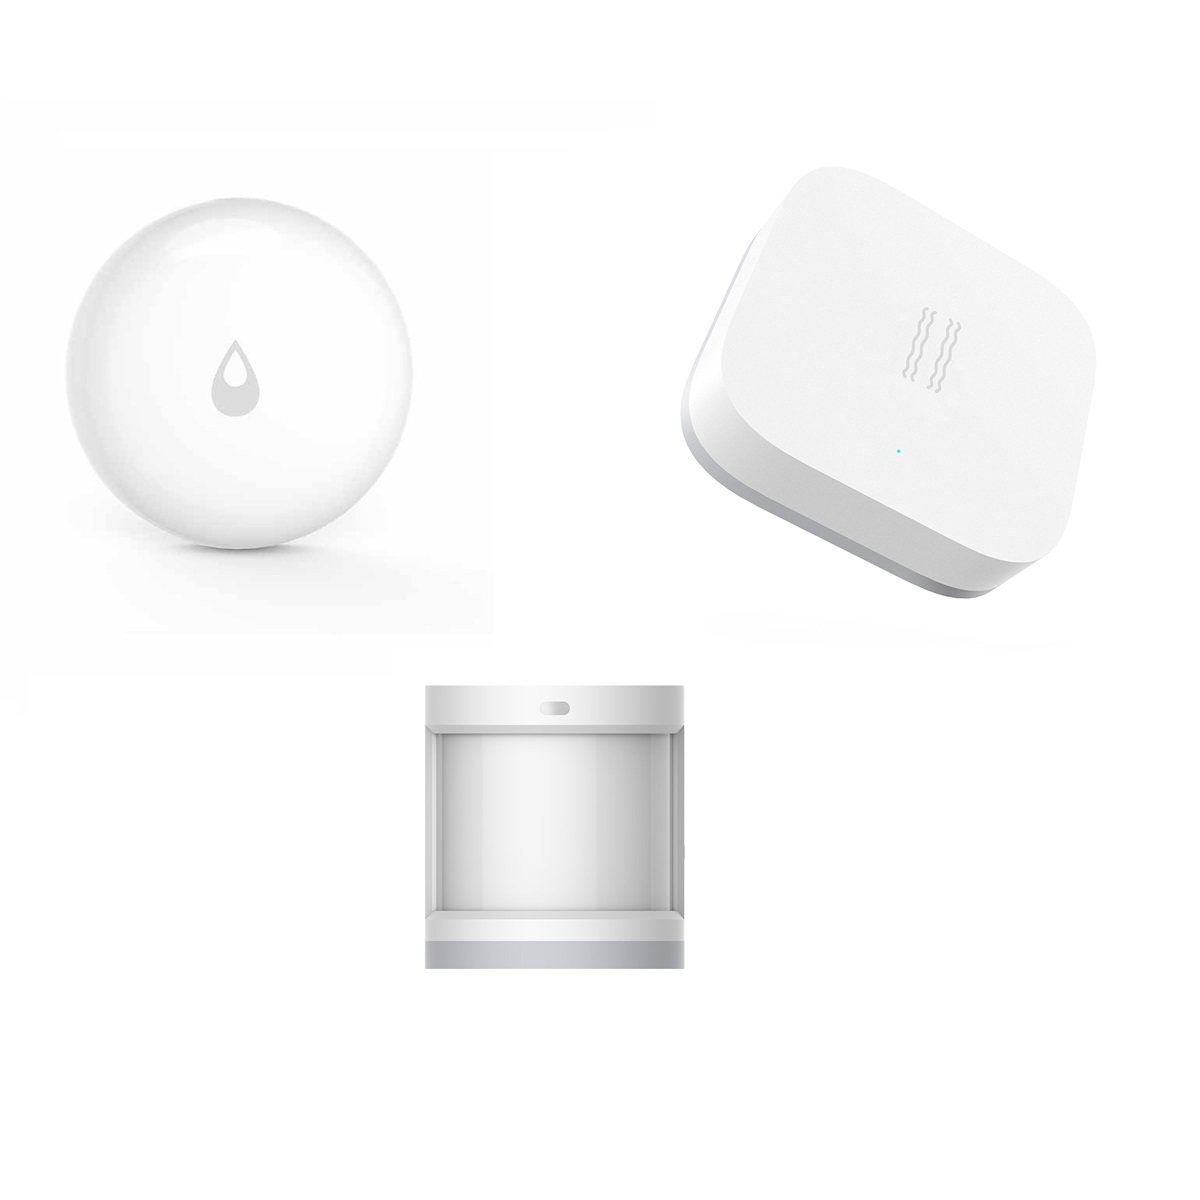 Aqara Bundle Bewegungssensor, Vibrationssensor, Wassersensor - kompatibel mit Apple HomeKit von Aqara